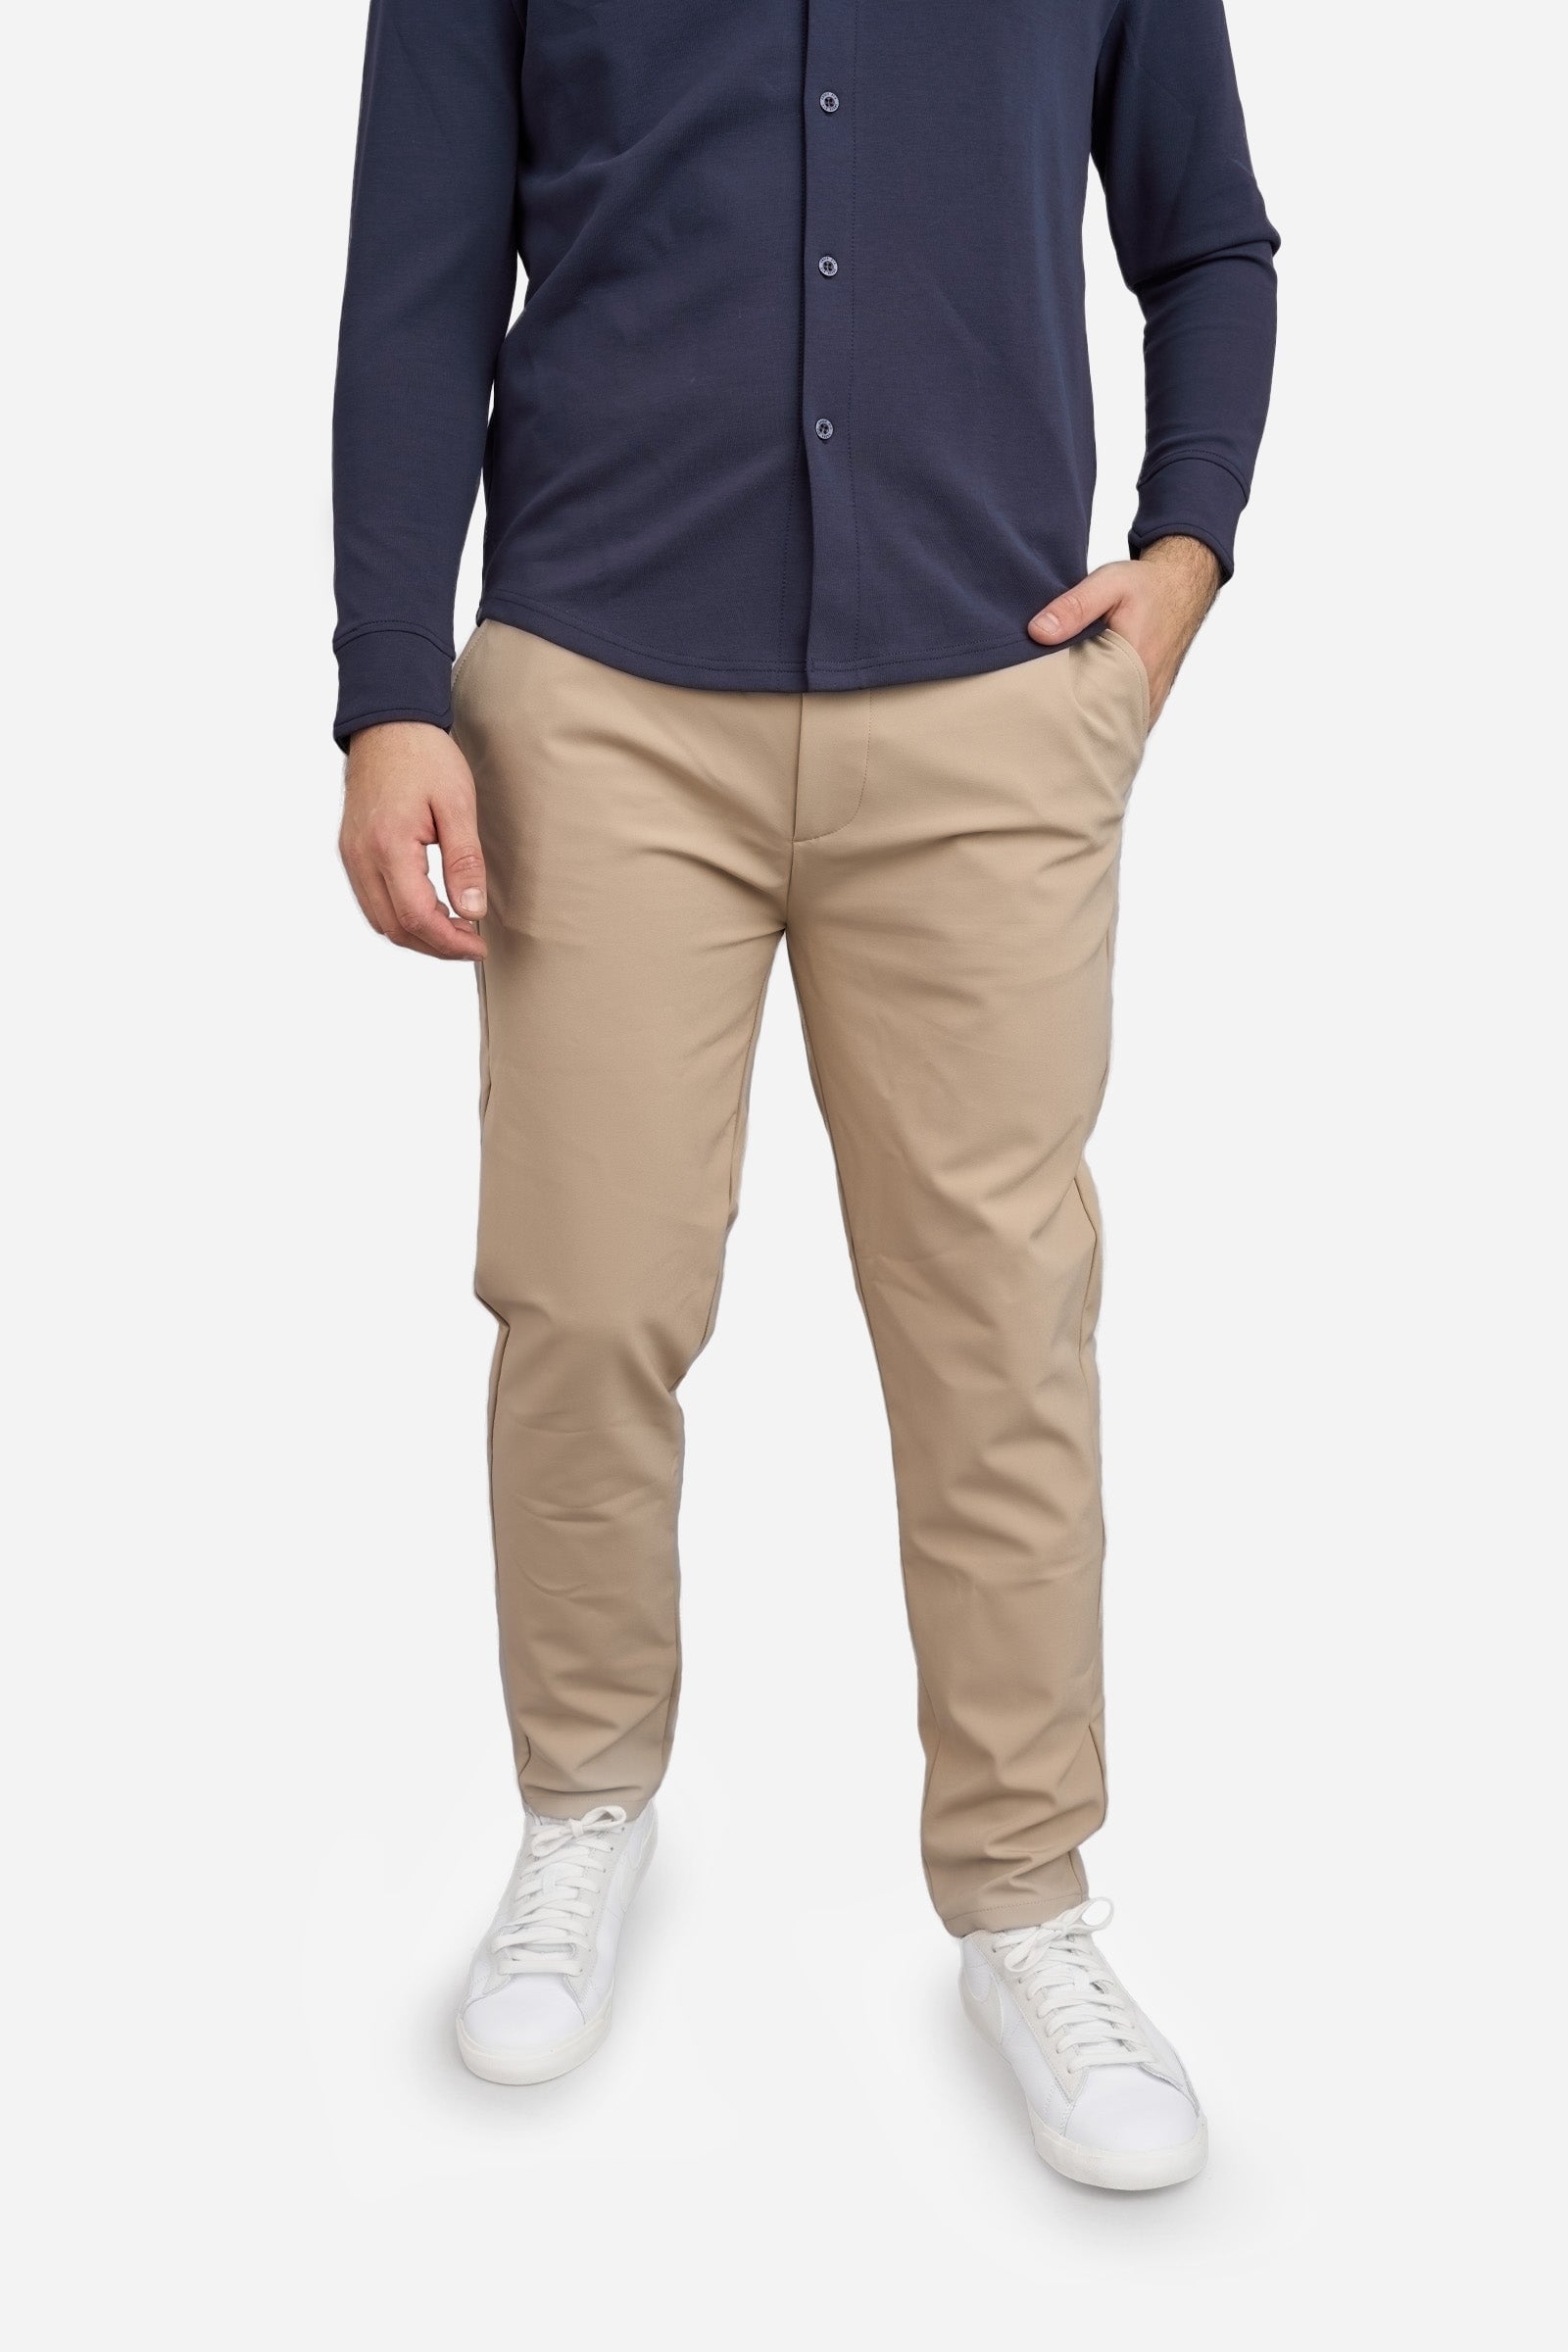 Polo Ralph Lauren Straight Fit Flat Front Stretch Twill Chino Pants |  Dillard's